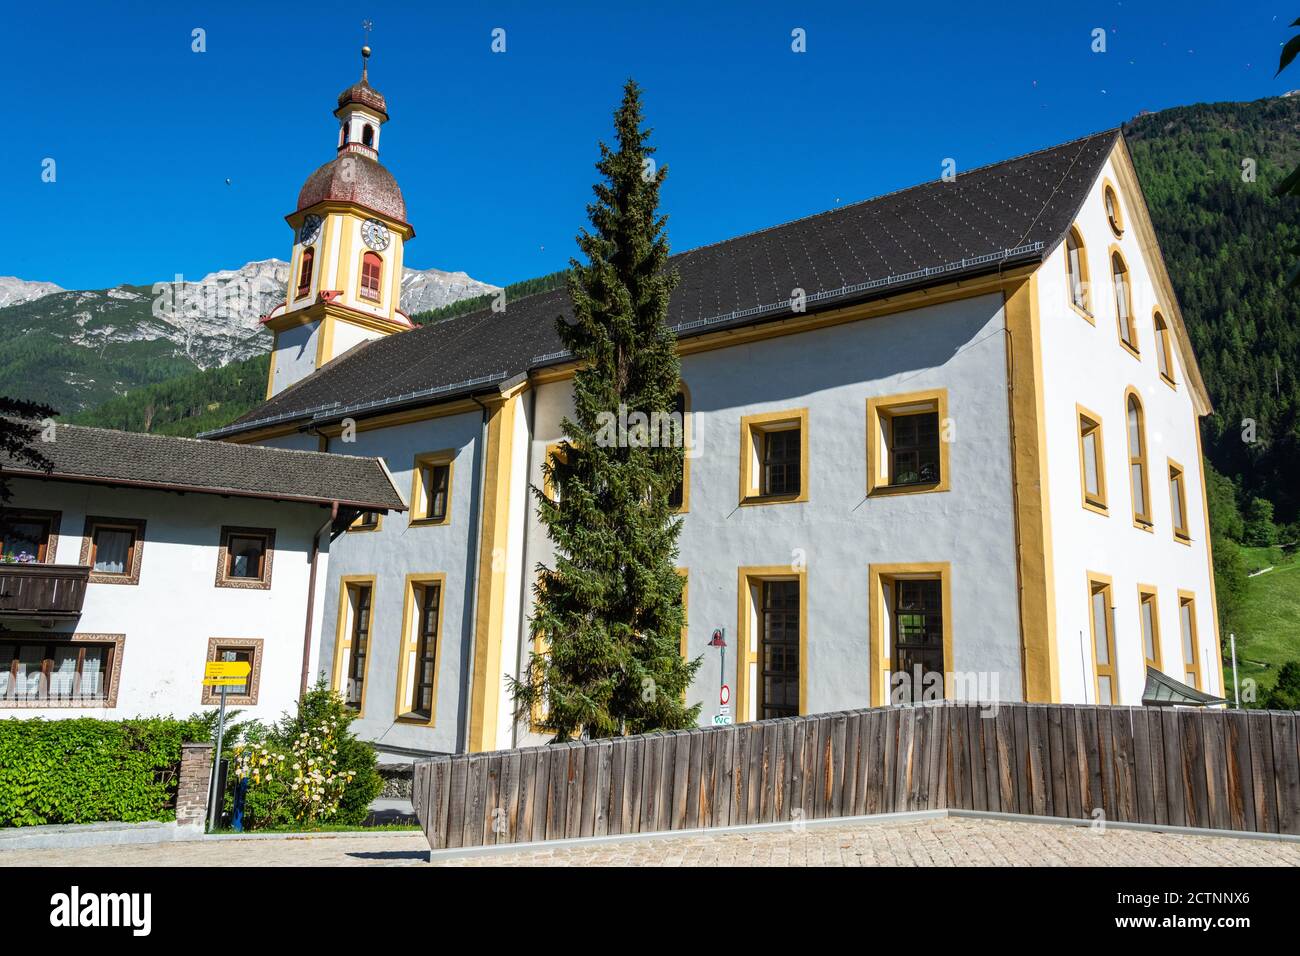 Neustift im Stubaital, Austria – May 27, 2017. Exterior view of the parish church Pfarre Neustift in Neustift. Stock Photo